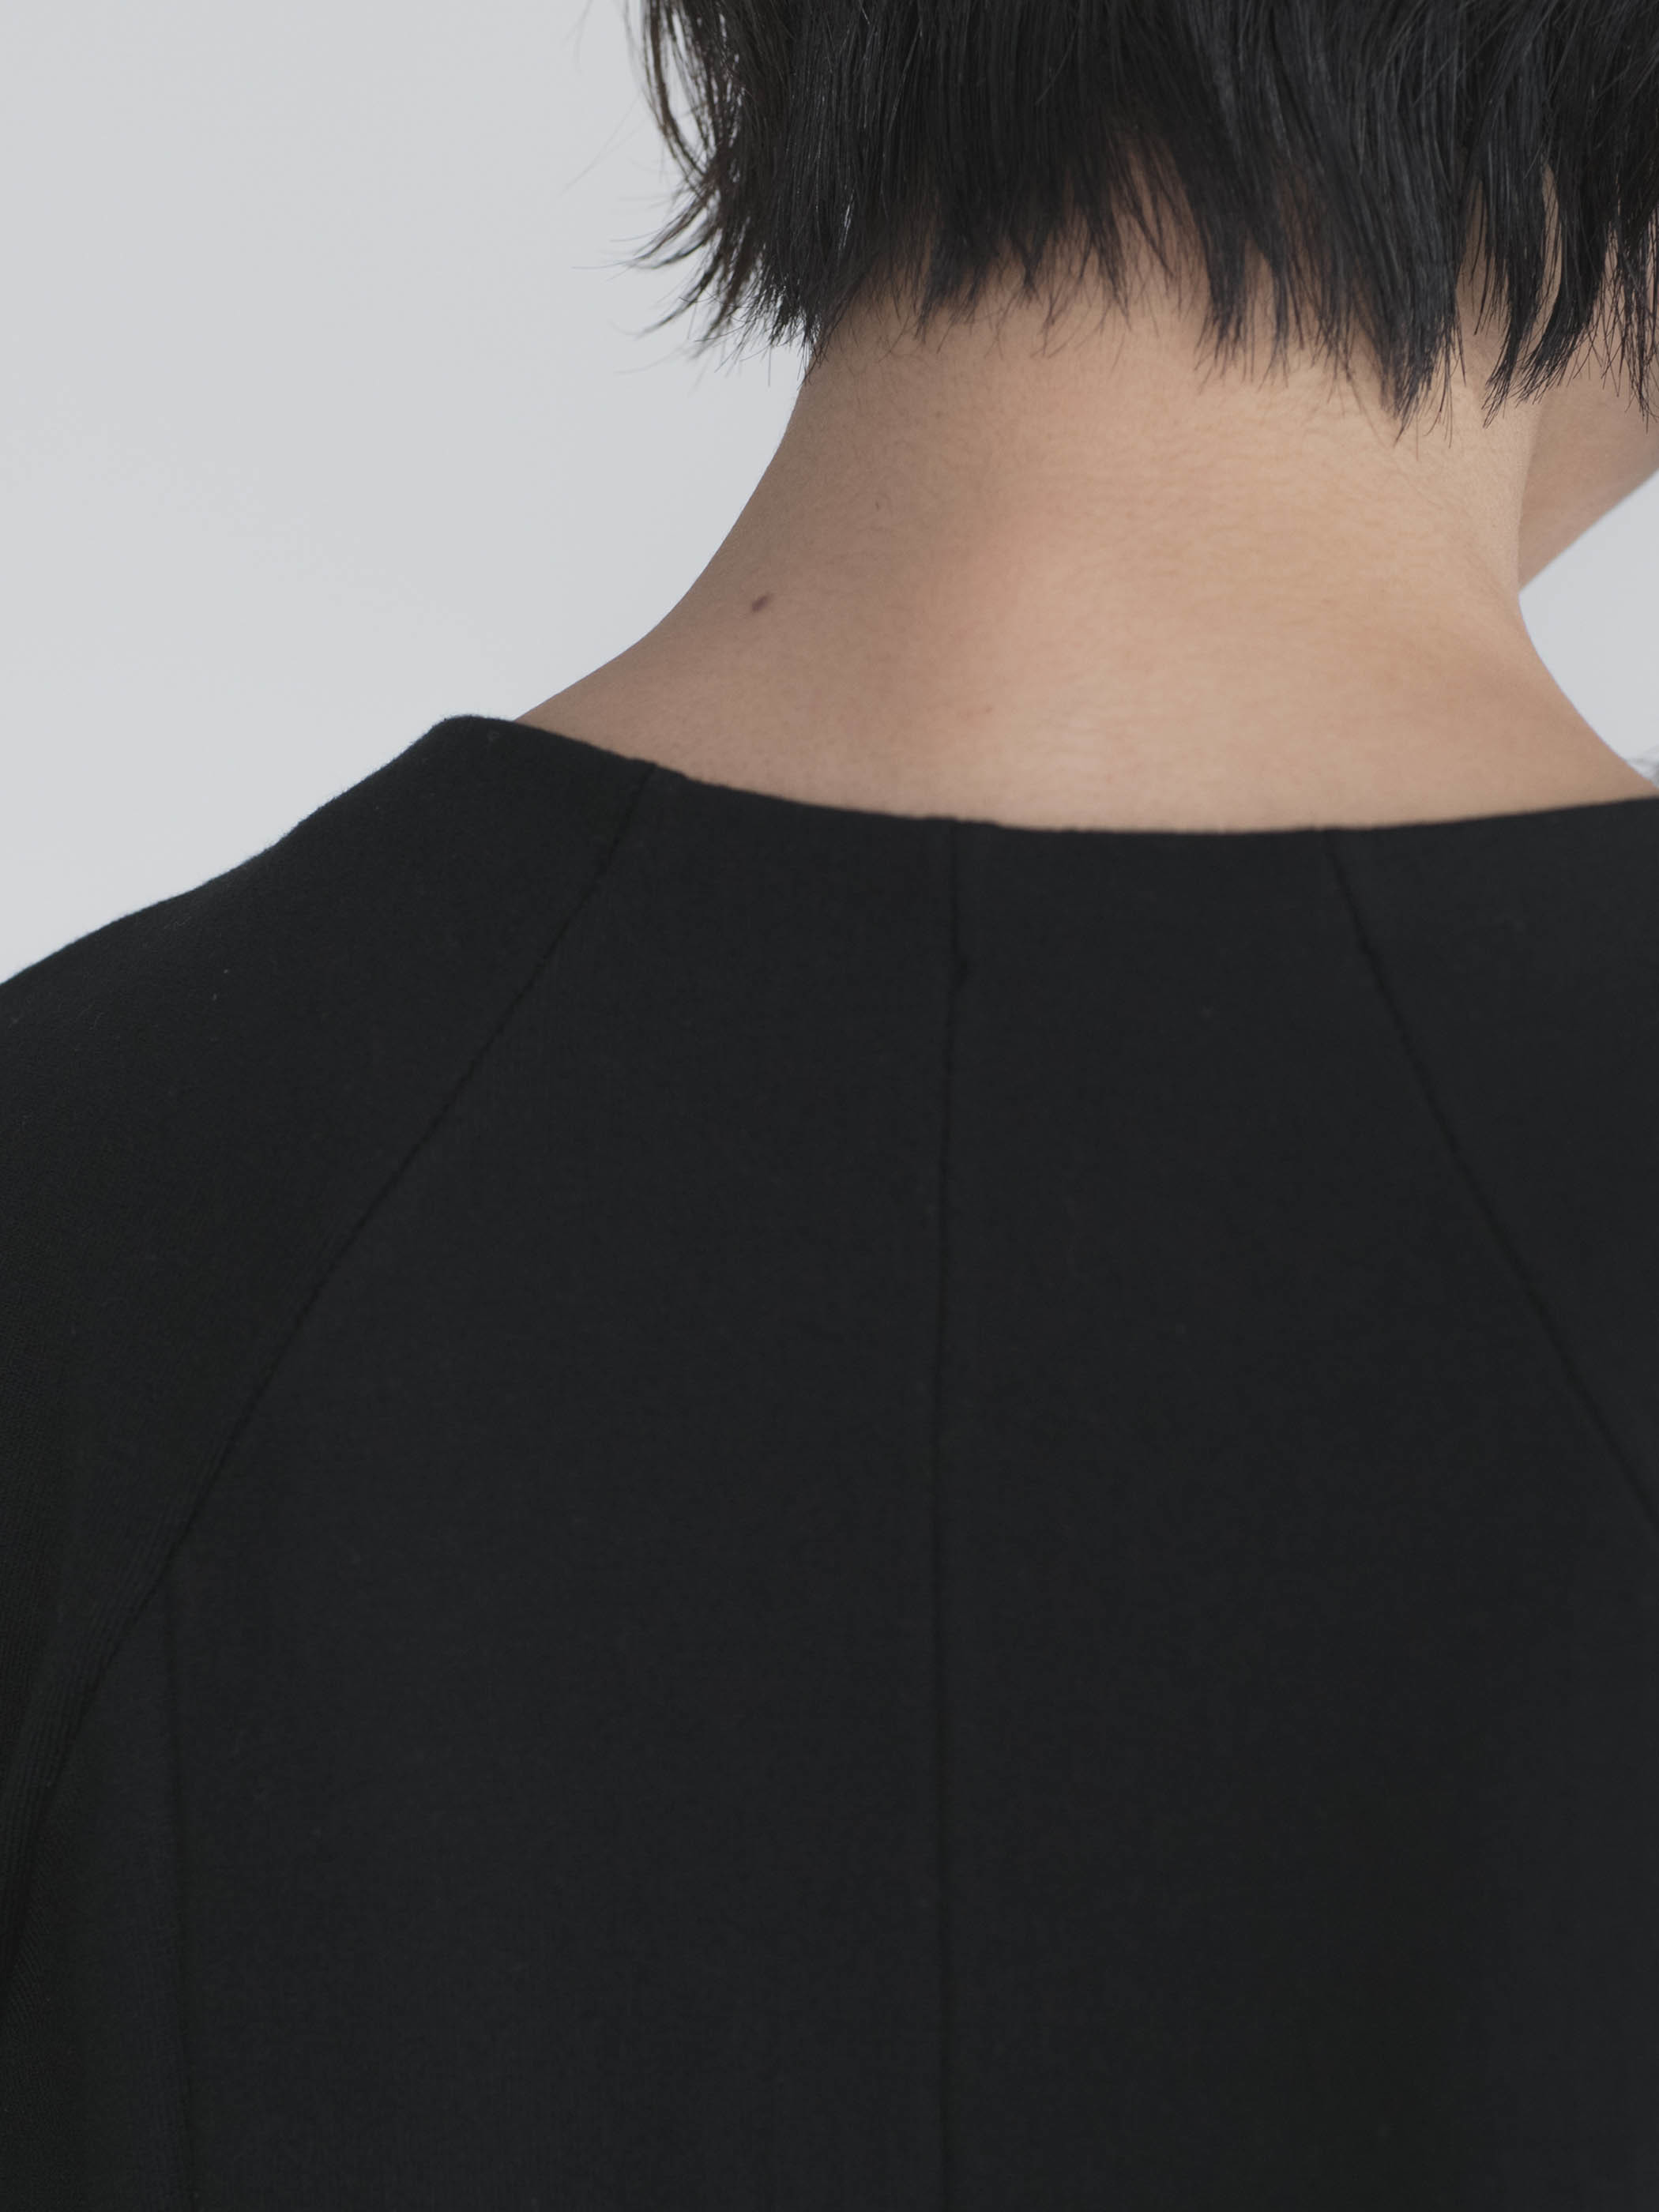 Work Wear collection Women’s R Necked Sweater Black(ラウンドネックセーター・ブラック)